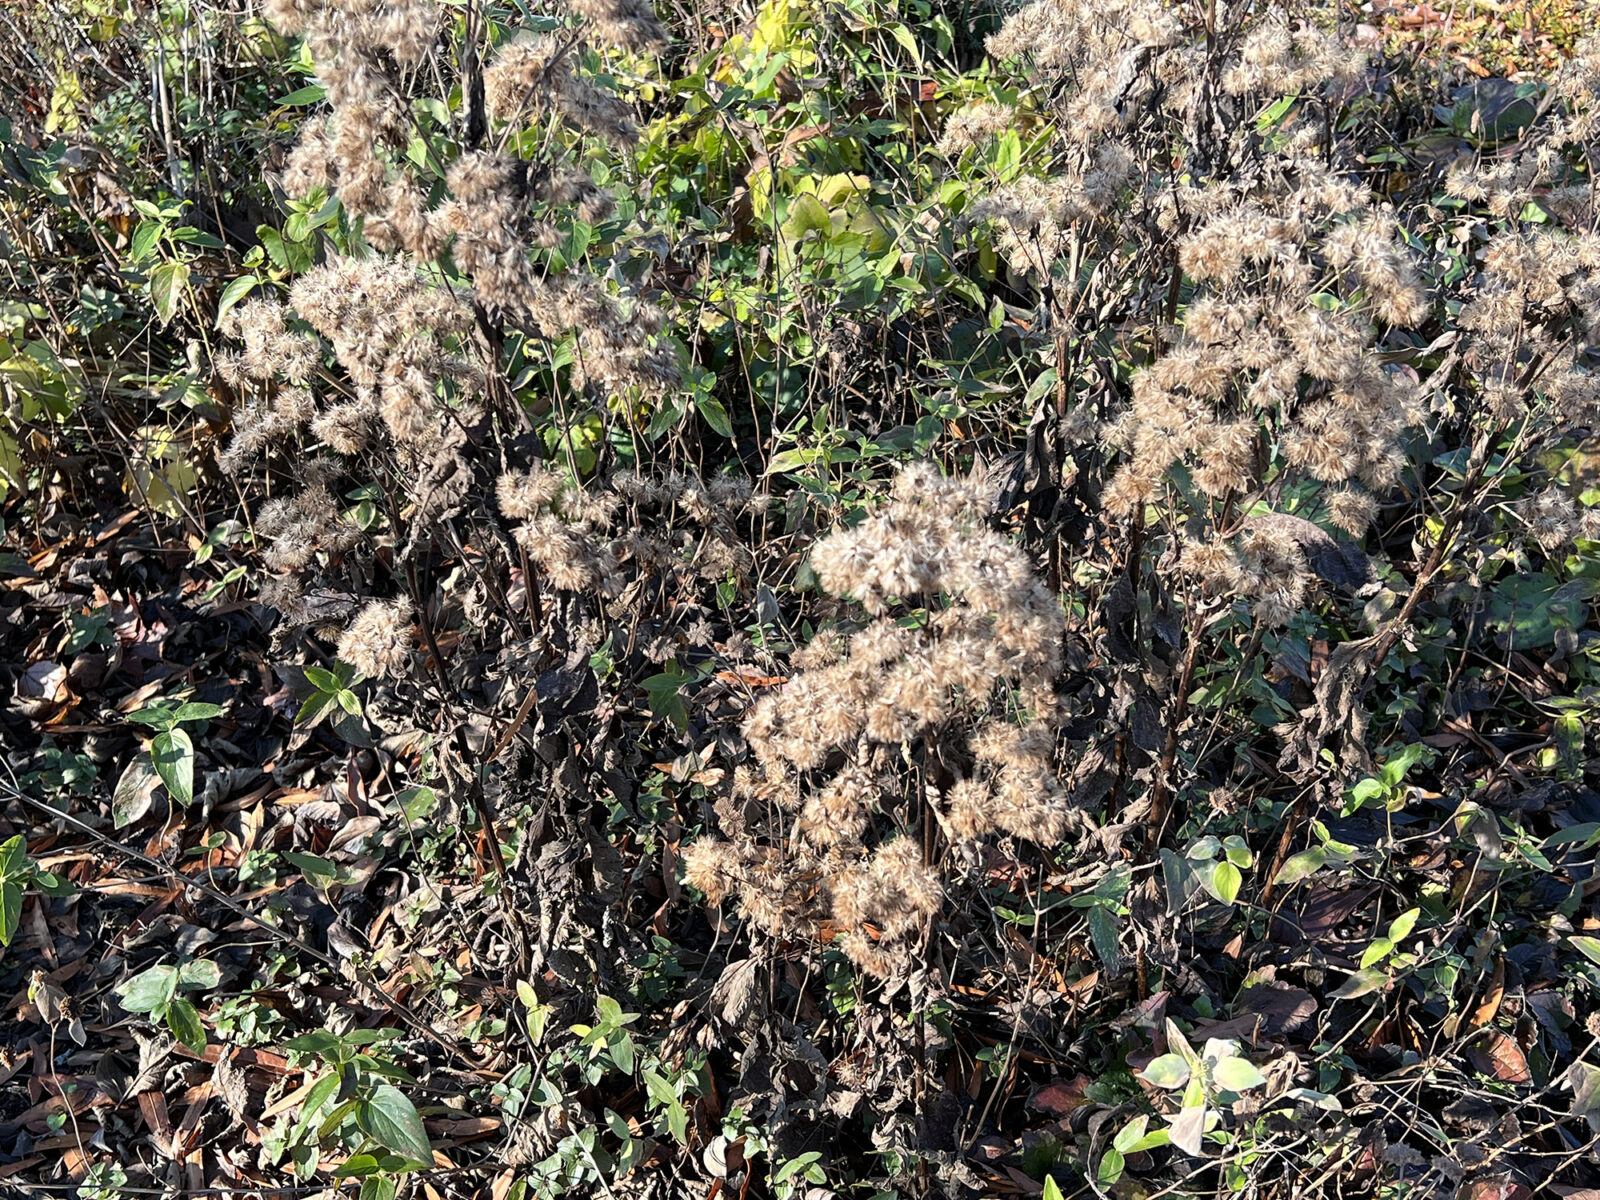 A close-up photo of brown, dry joe-pye weed plants.